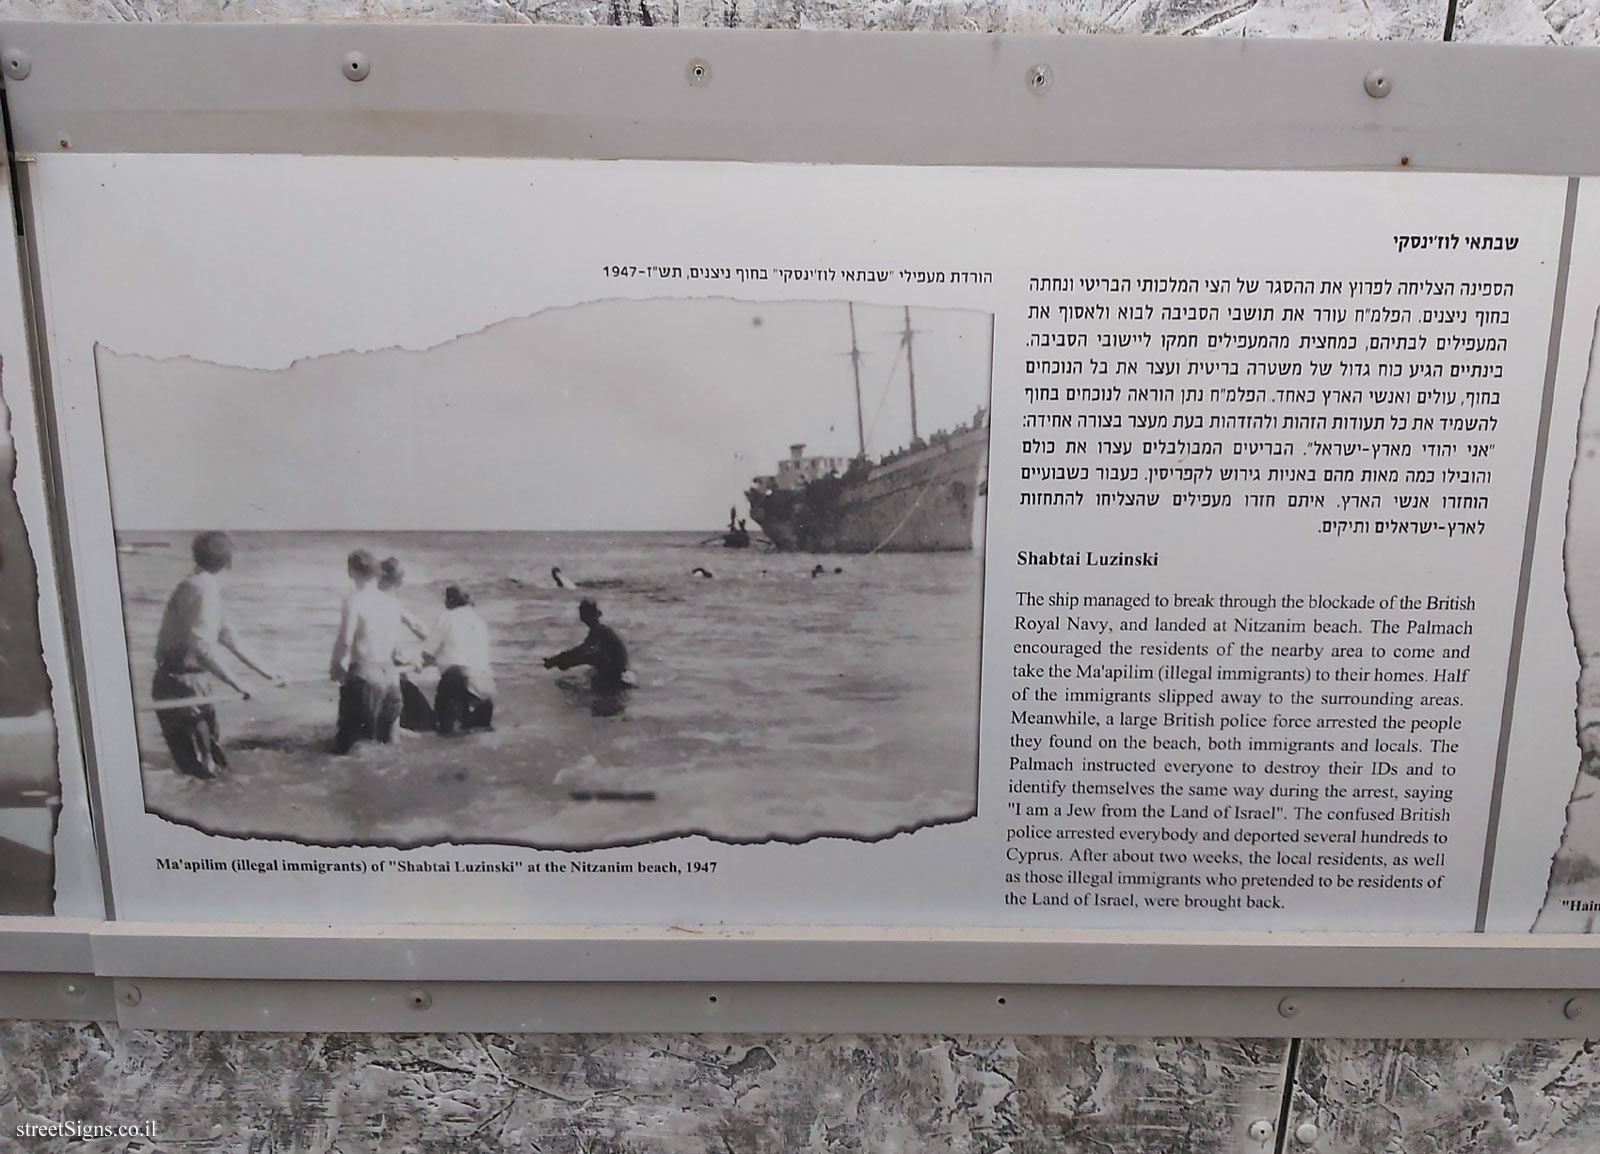 Tel Aviv - London Garden - The story of the illegal immigration - The ship "Shabtai Luzinski"